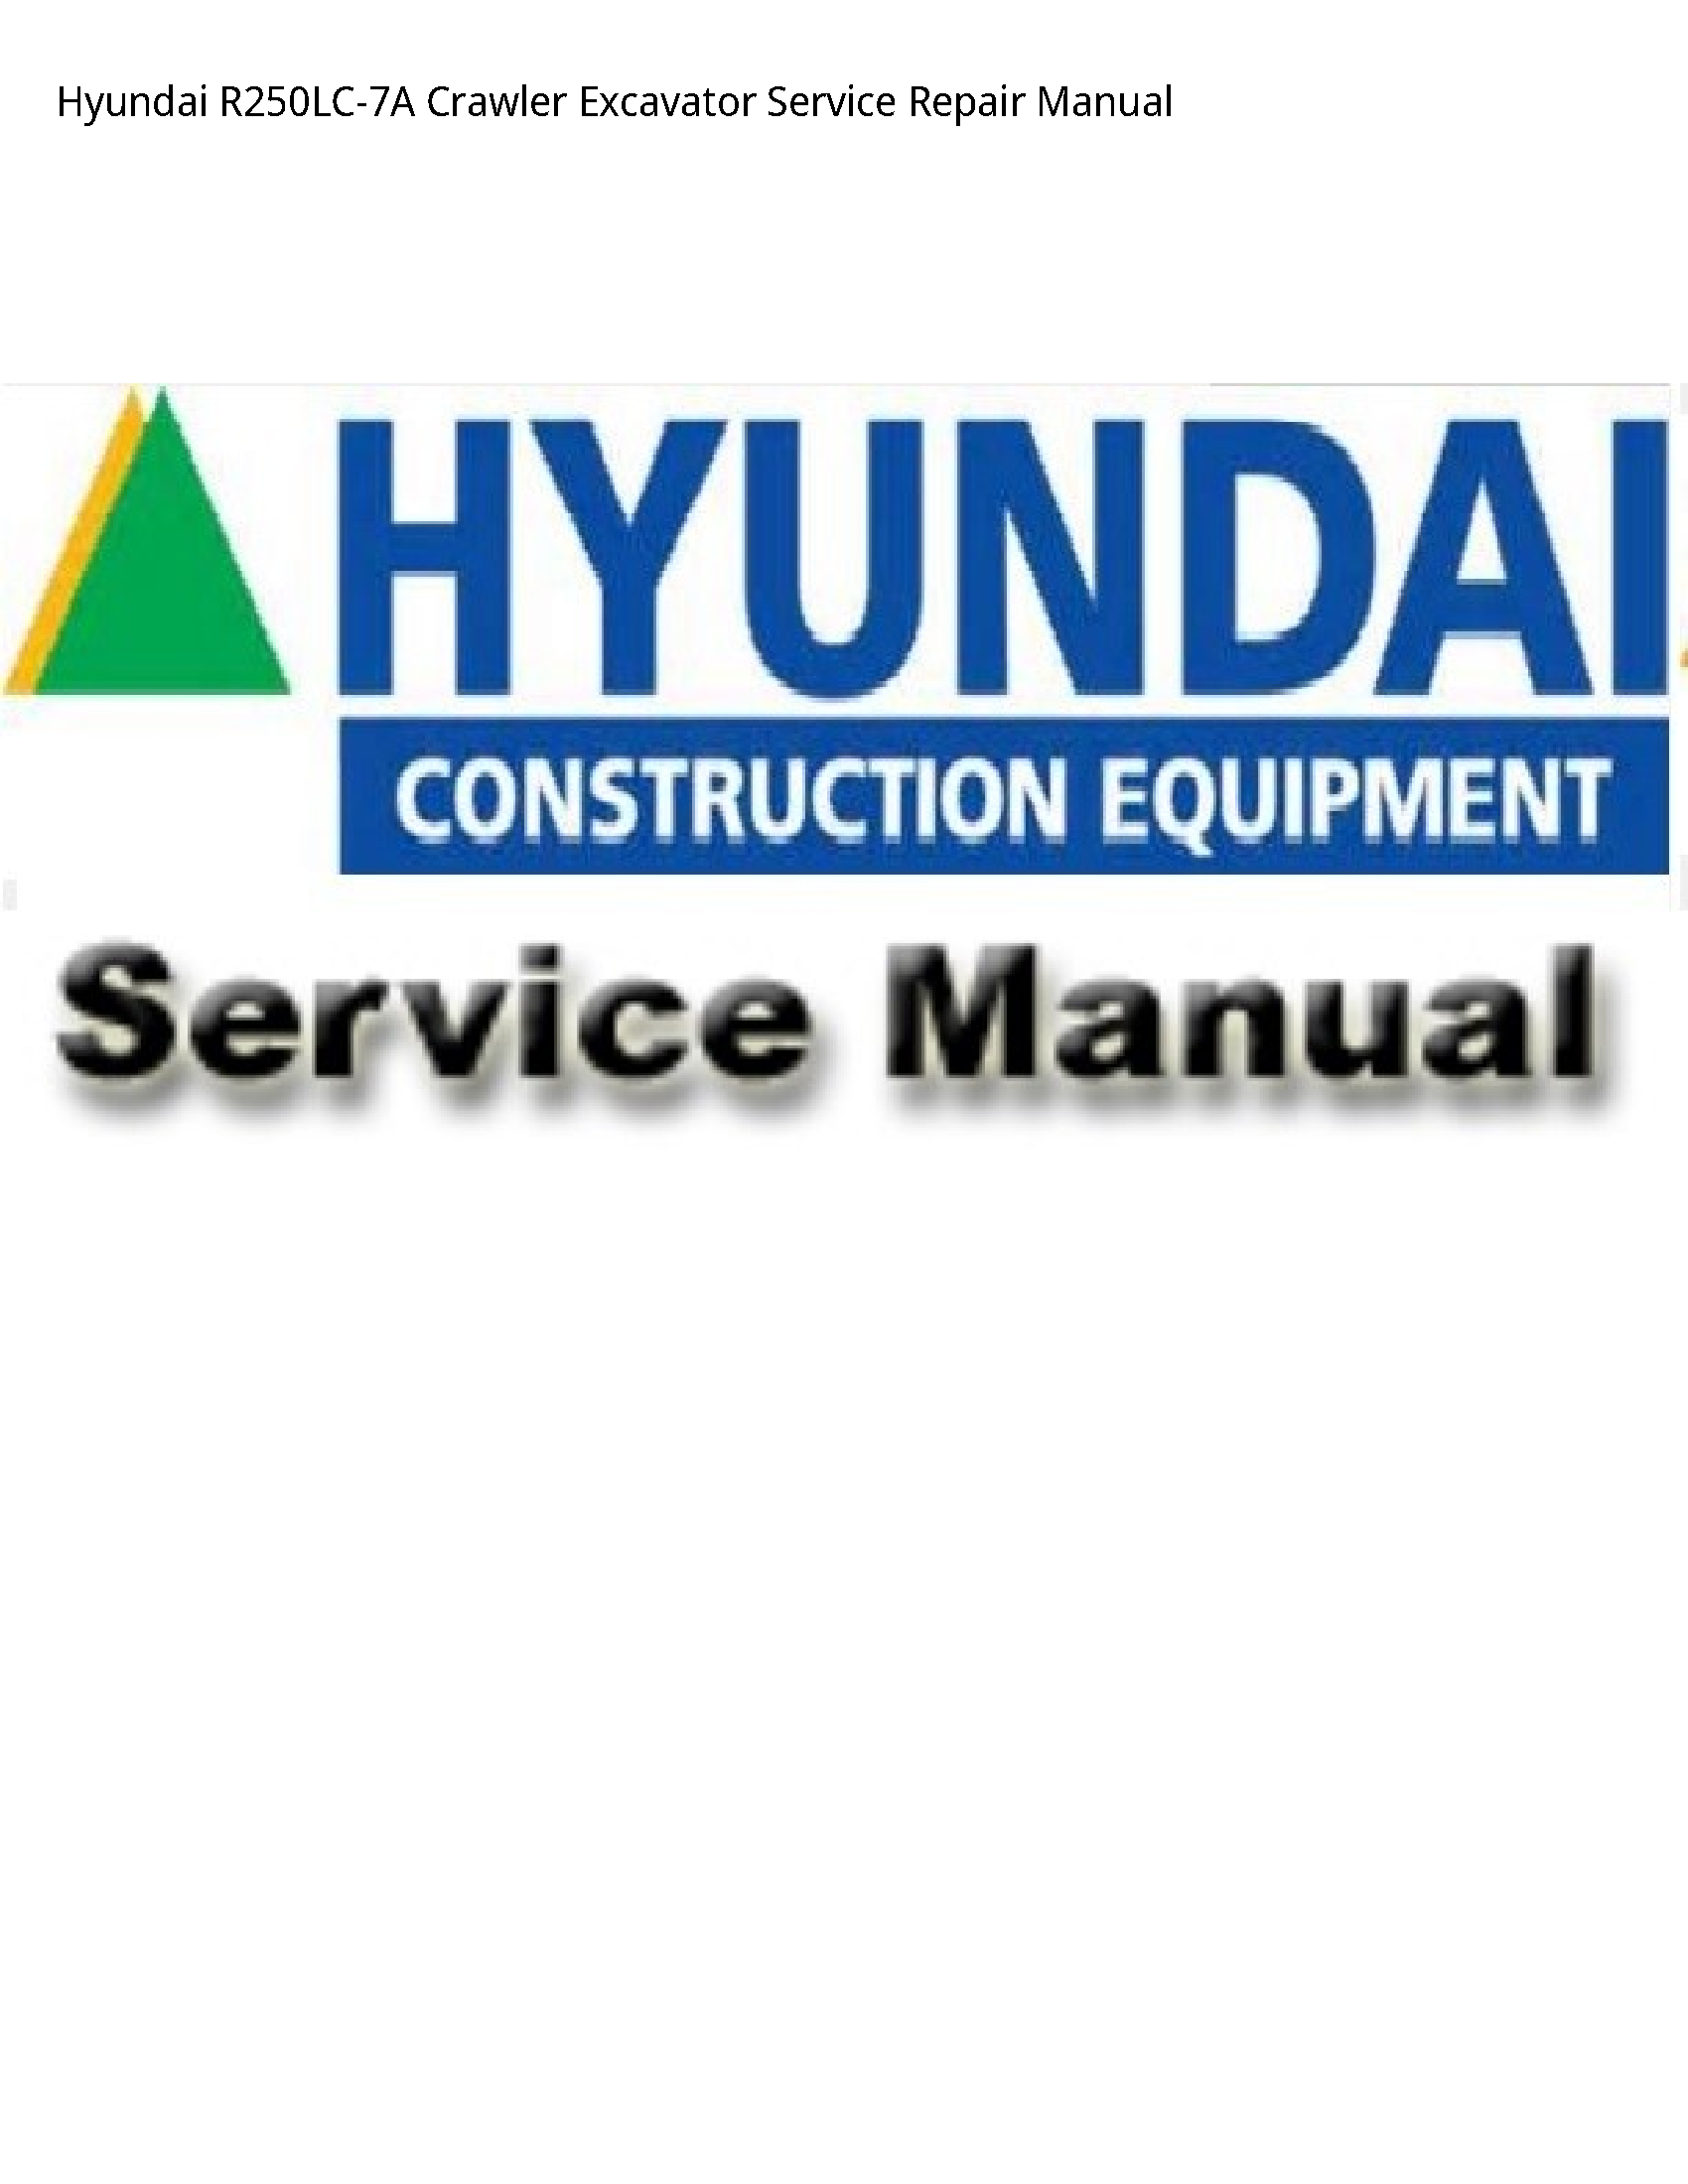 Hyundai R250LC-7A Crawler Excavator manual